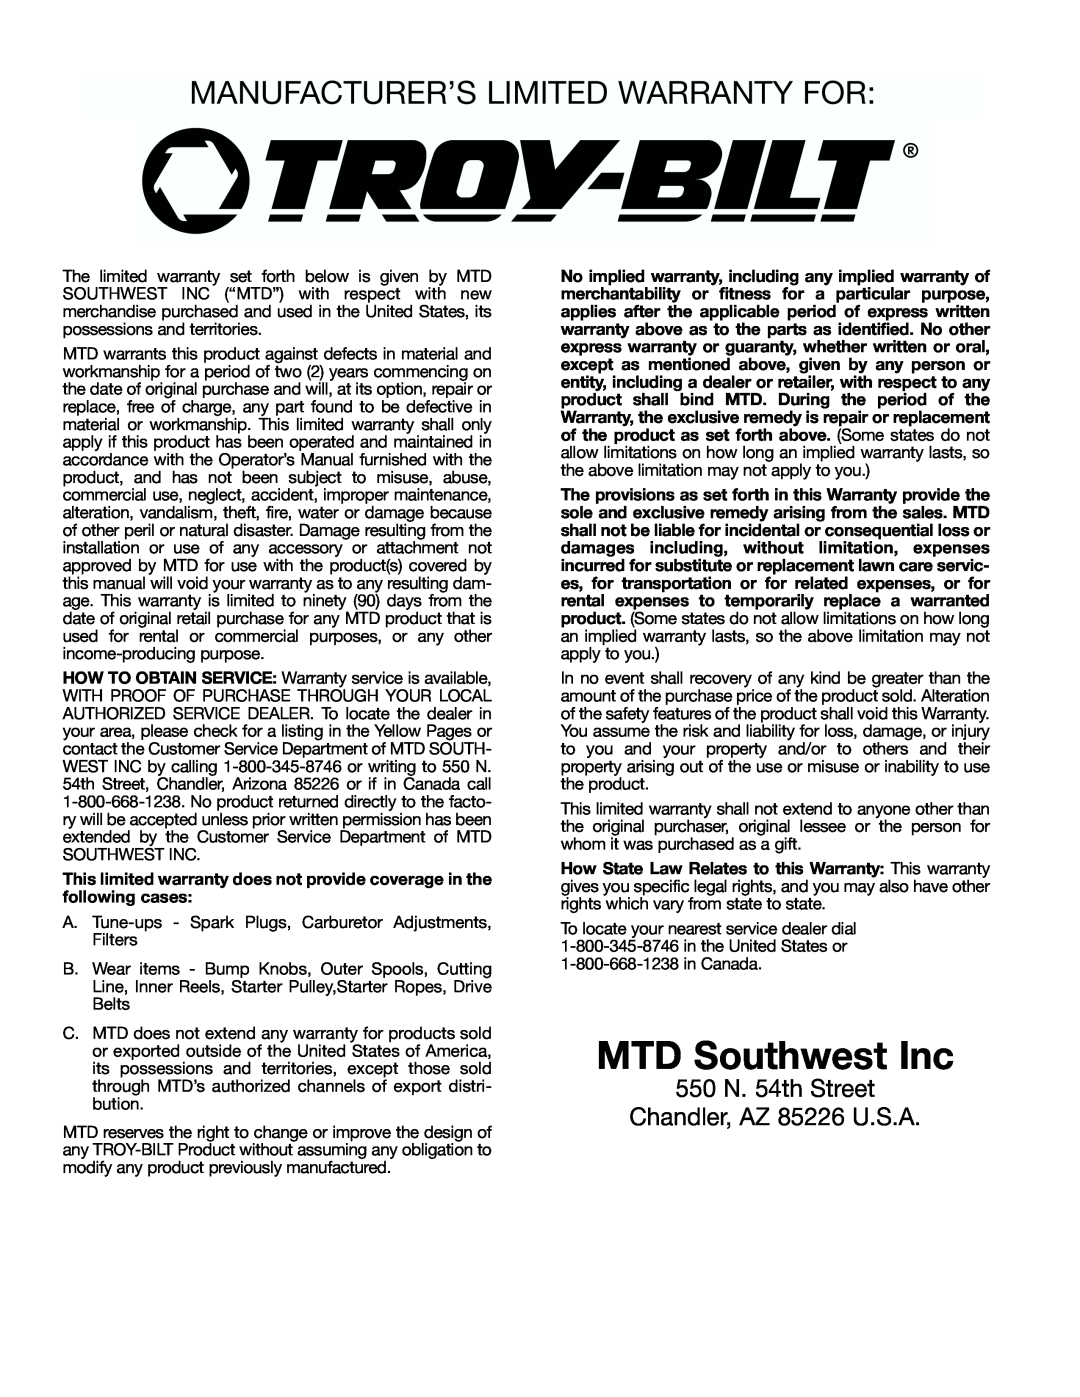 Troy-Bilt TB4000 manual MTD Southwest Inc, Manufacturer’S Limited Warranty For, 550 N. 54th Street Chandler, AZ 85226 U.S.A 